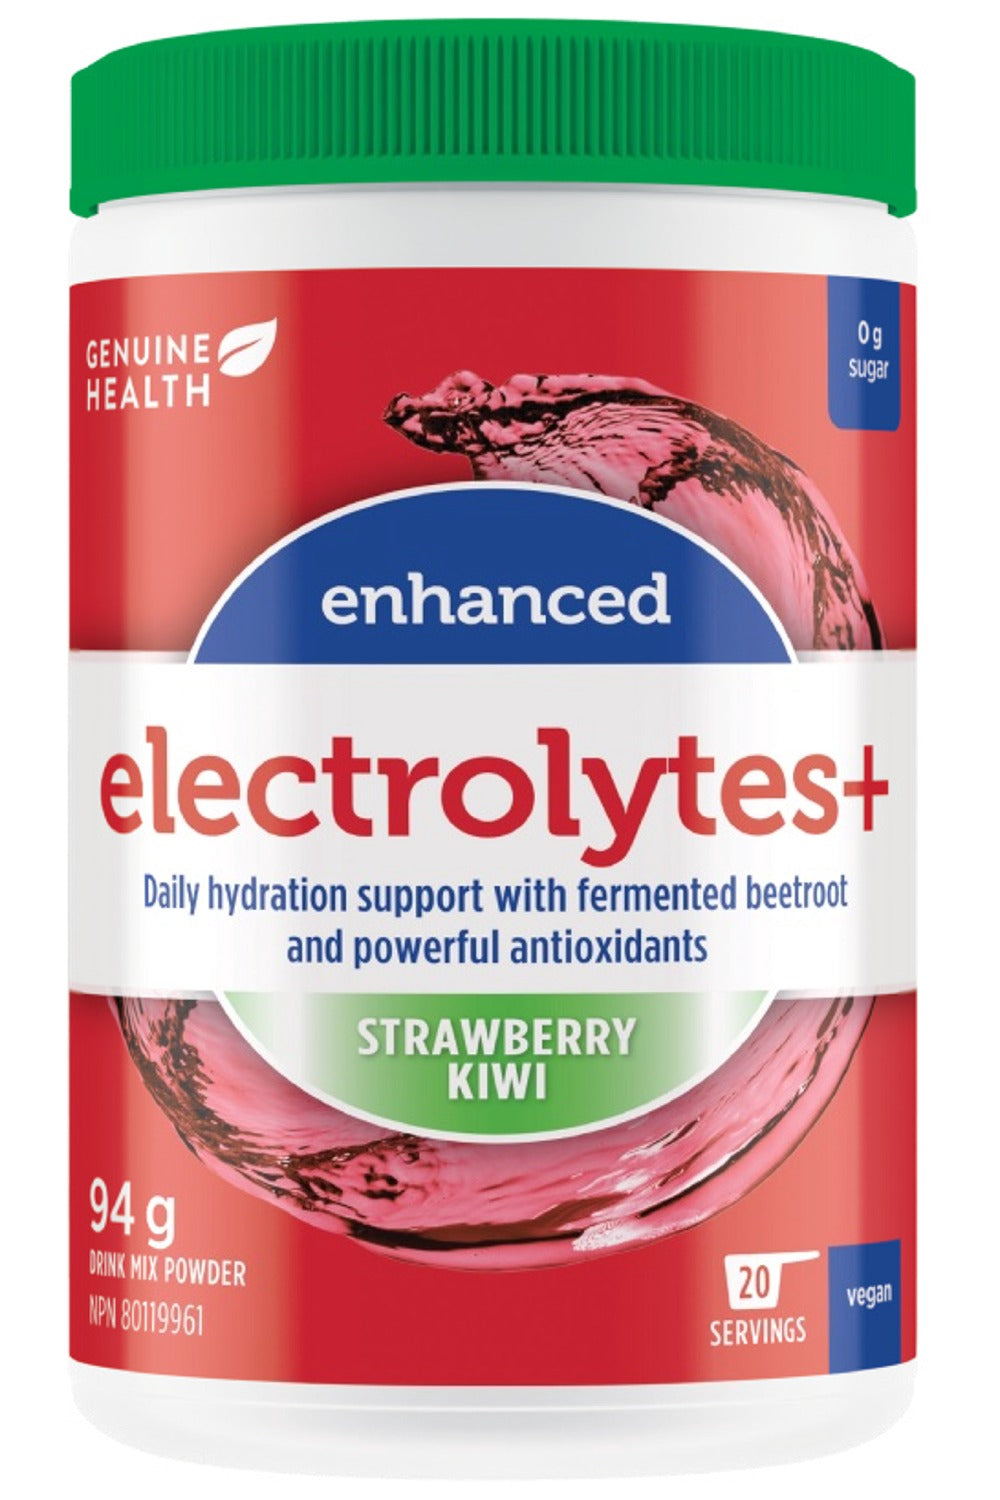 GENUINE HEALTH Enhanced Electrolytes+ (Strawberry Kiwi - 94 gr)